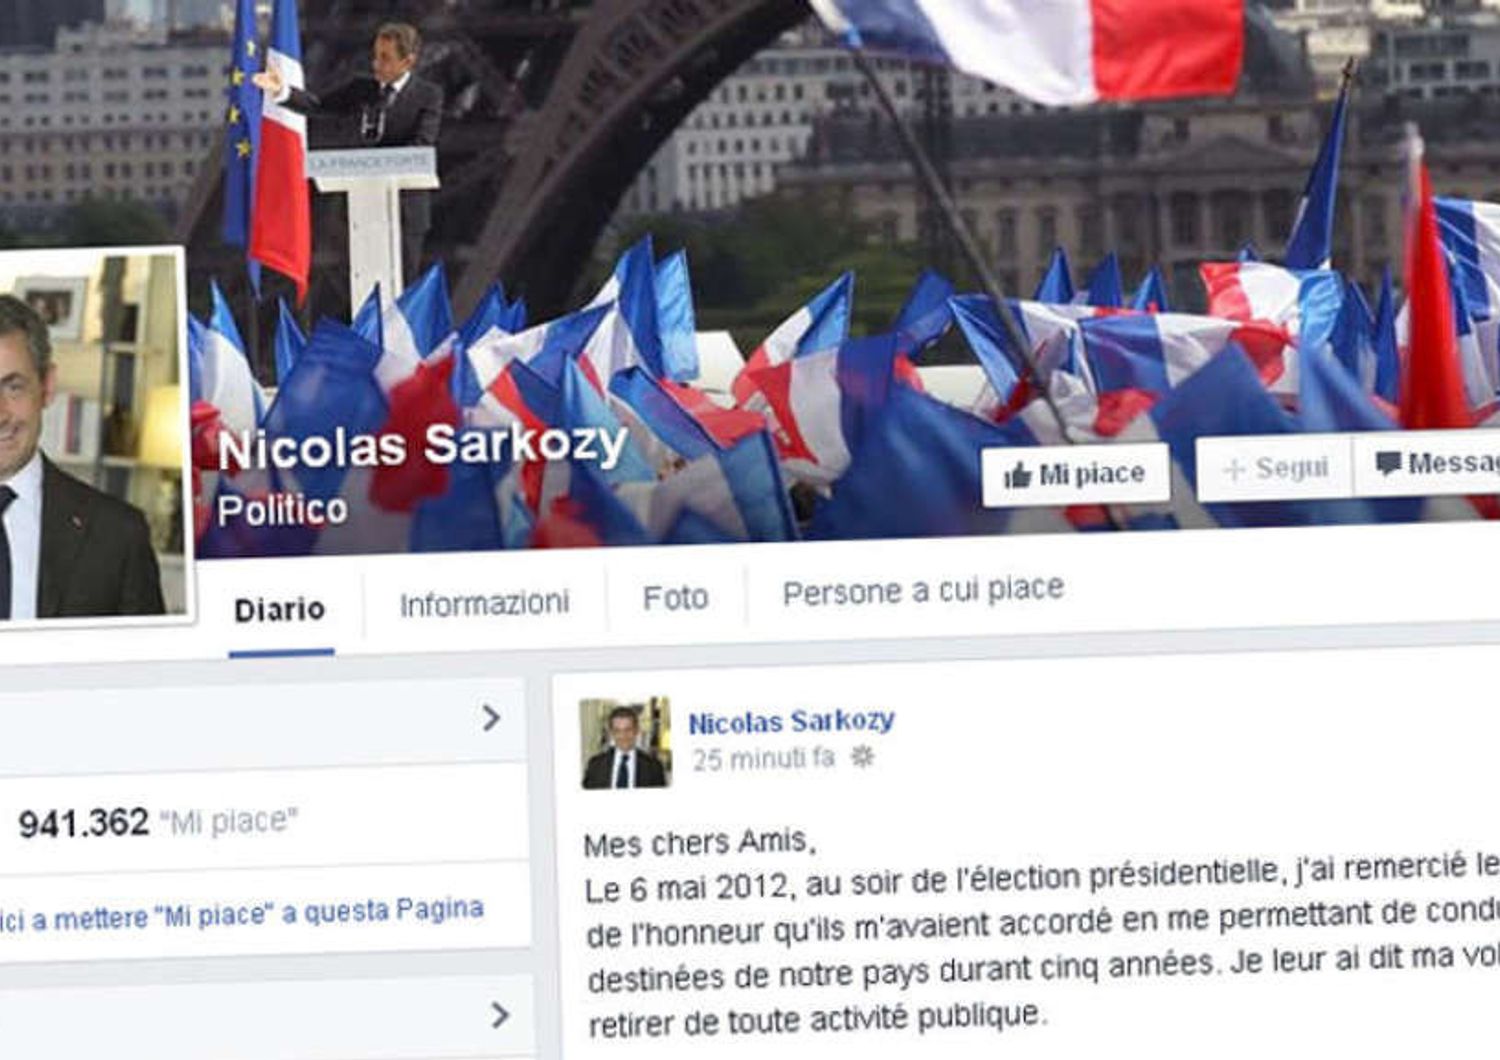 Sarkozy ritorna alla politica, l'annuncio su Facebook